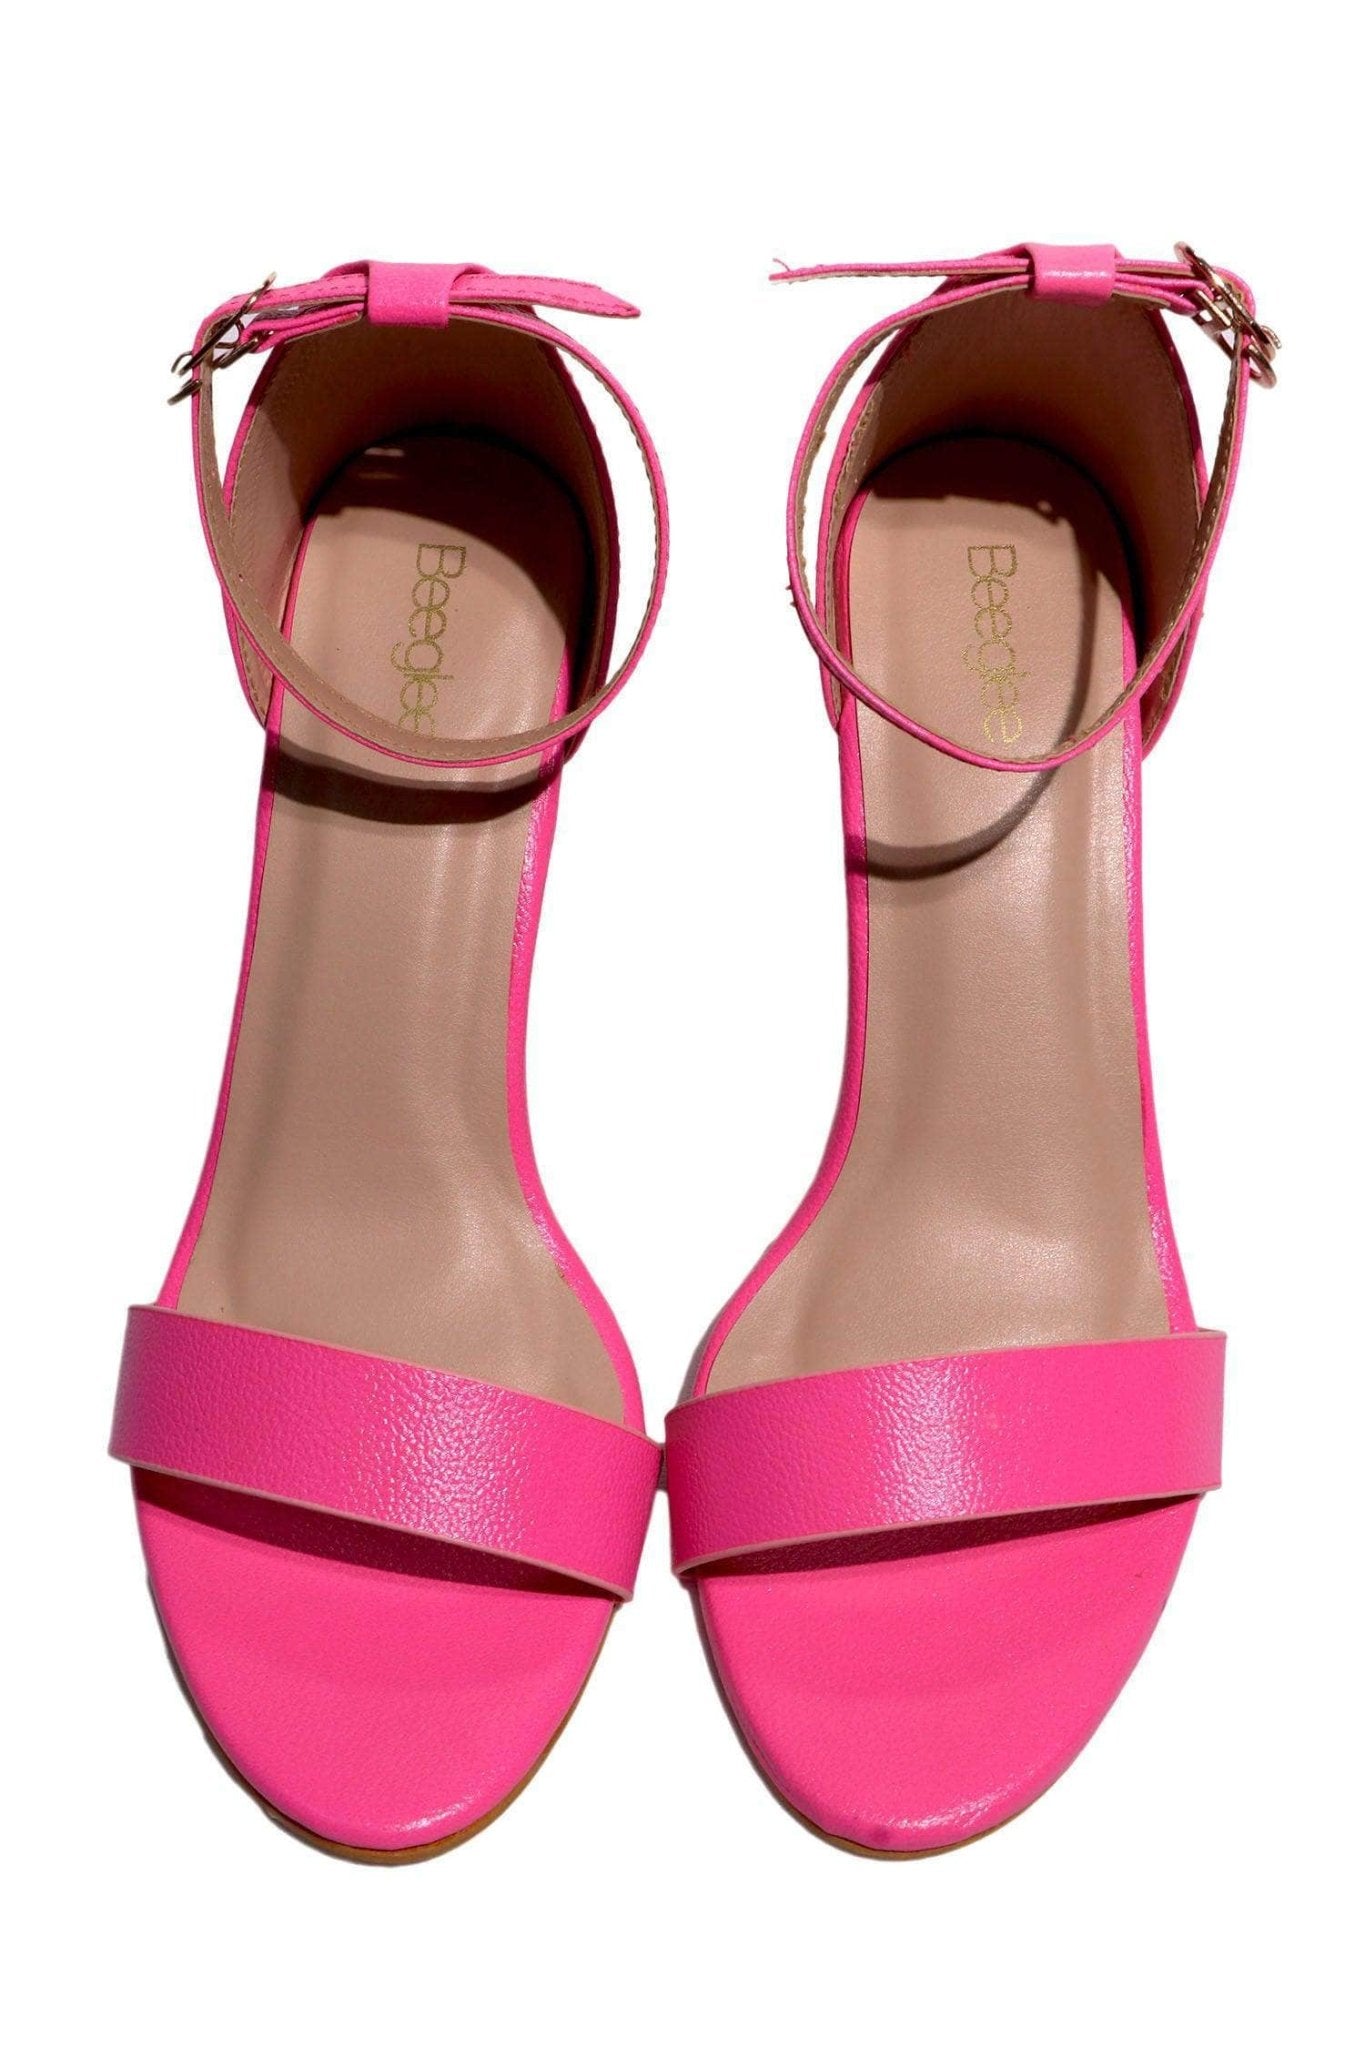 Hot Pink Ankle Strap Clear Block Heel Sandals - BEEGLEE